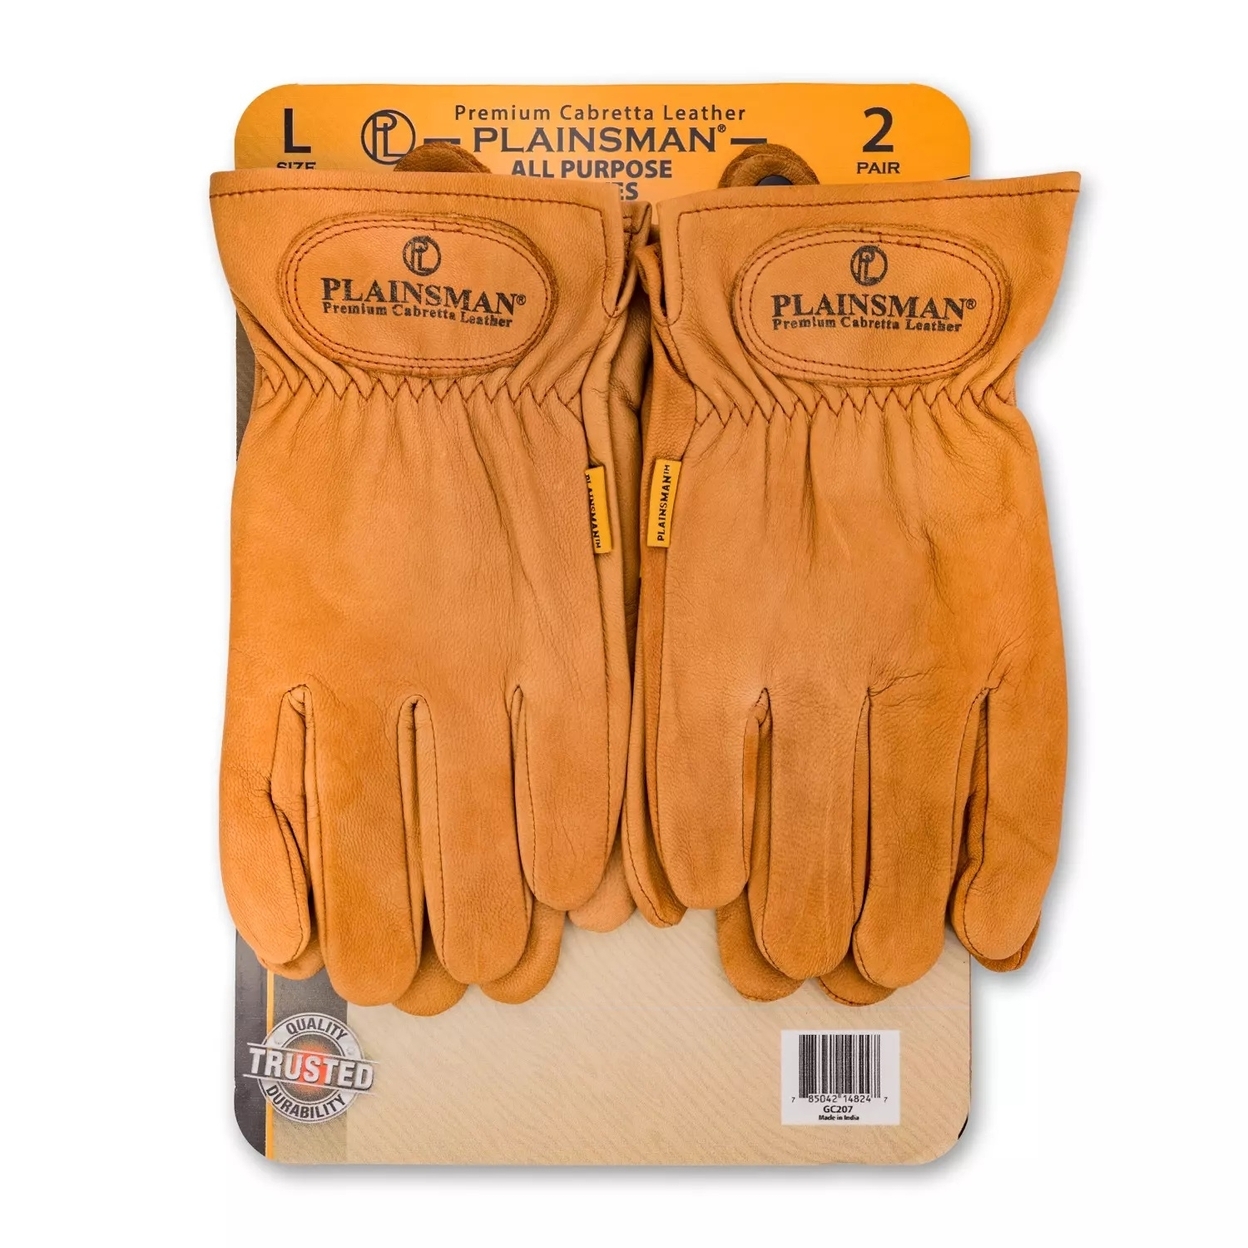 Plainsman Premium Cabretta Brown Leather Gloves, 2 Pairs (Large)